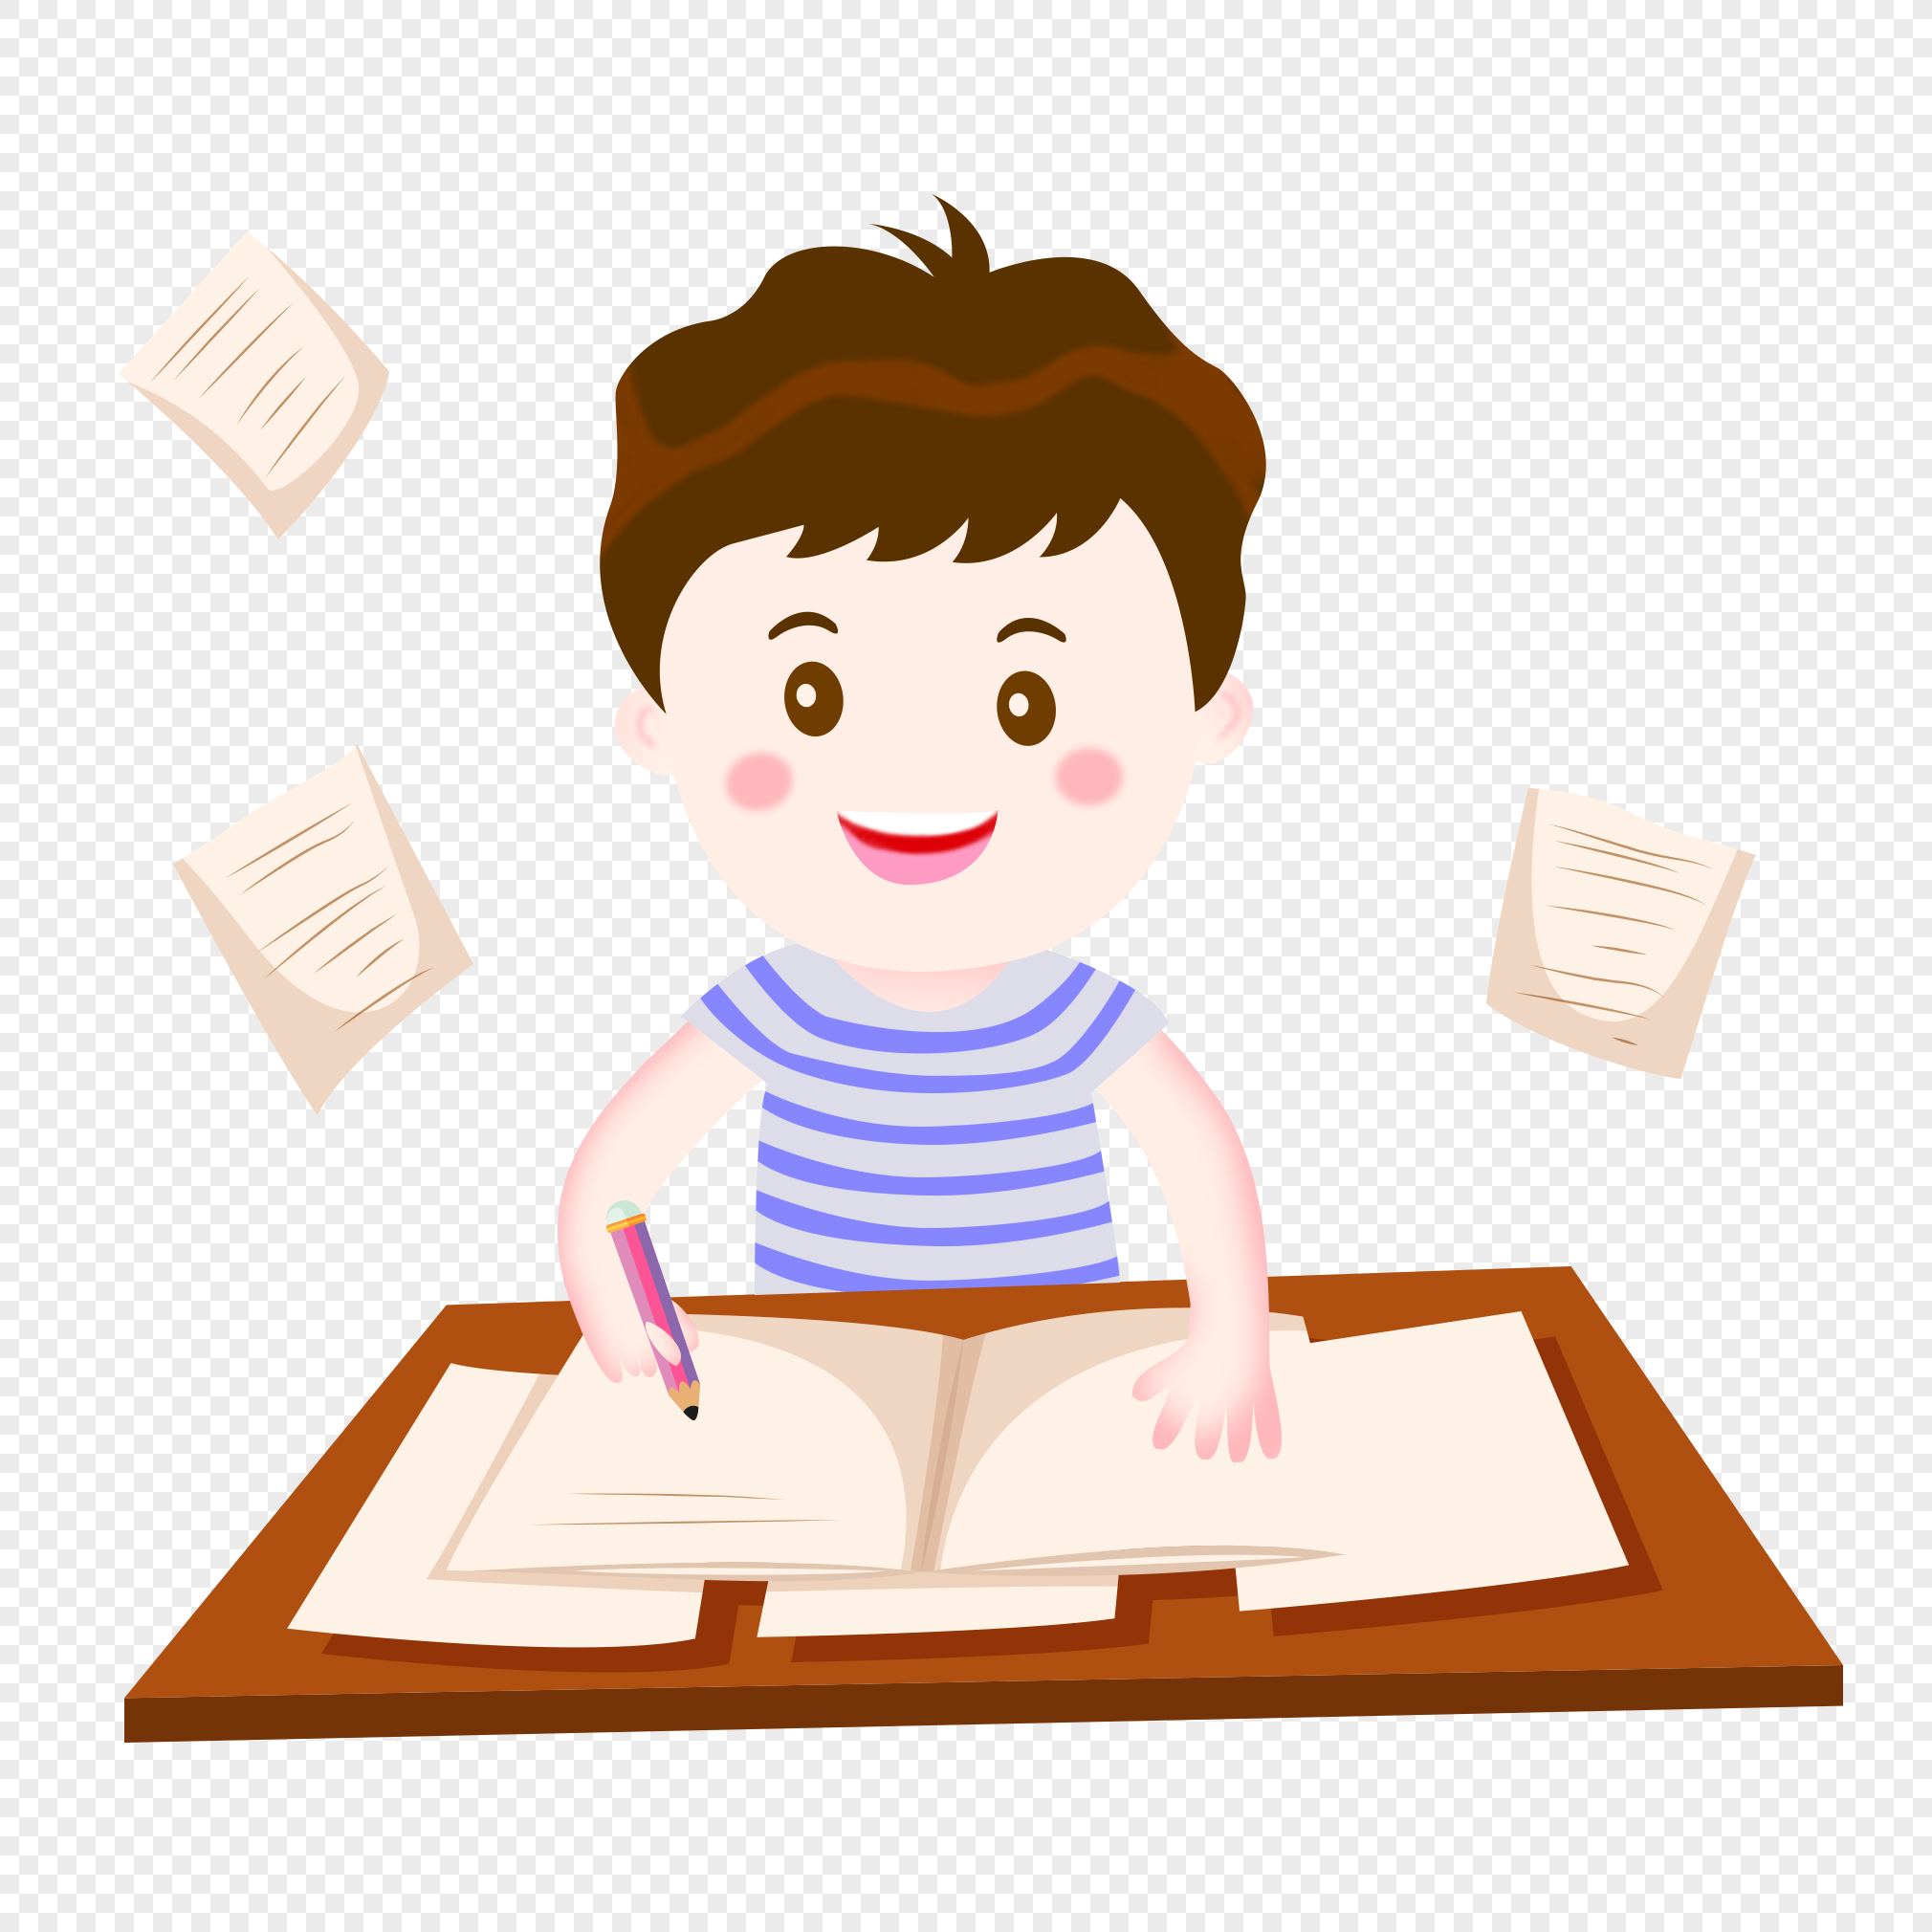 Boy doing homework, summer homework, and homework, assignments png image free download